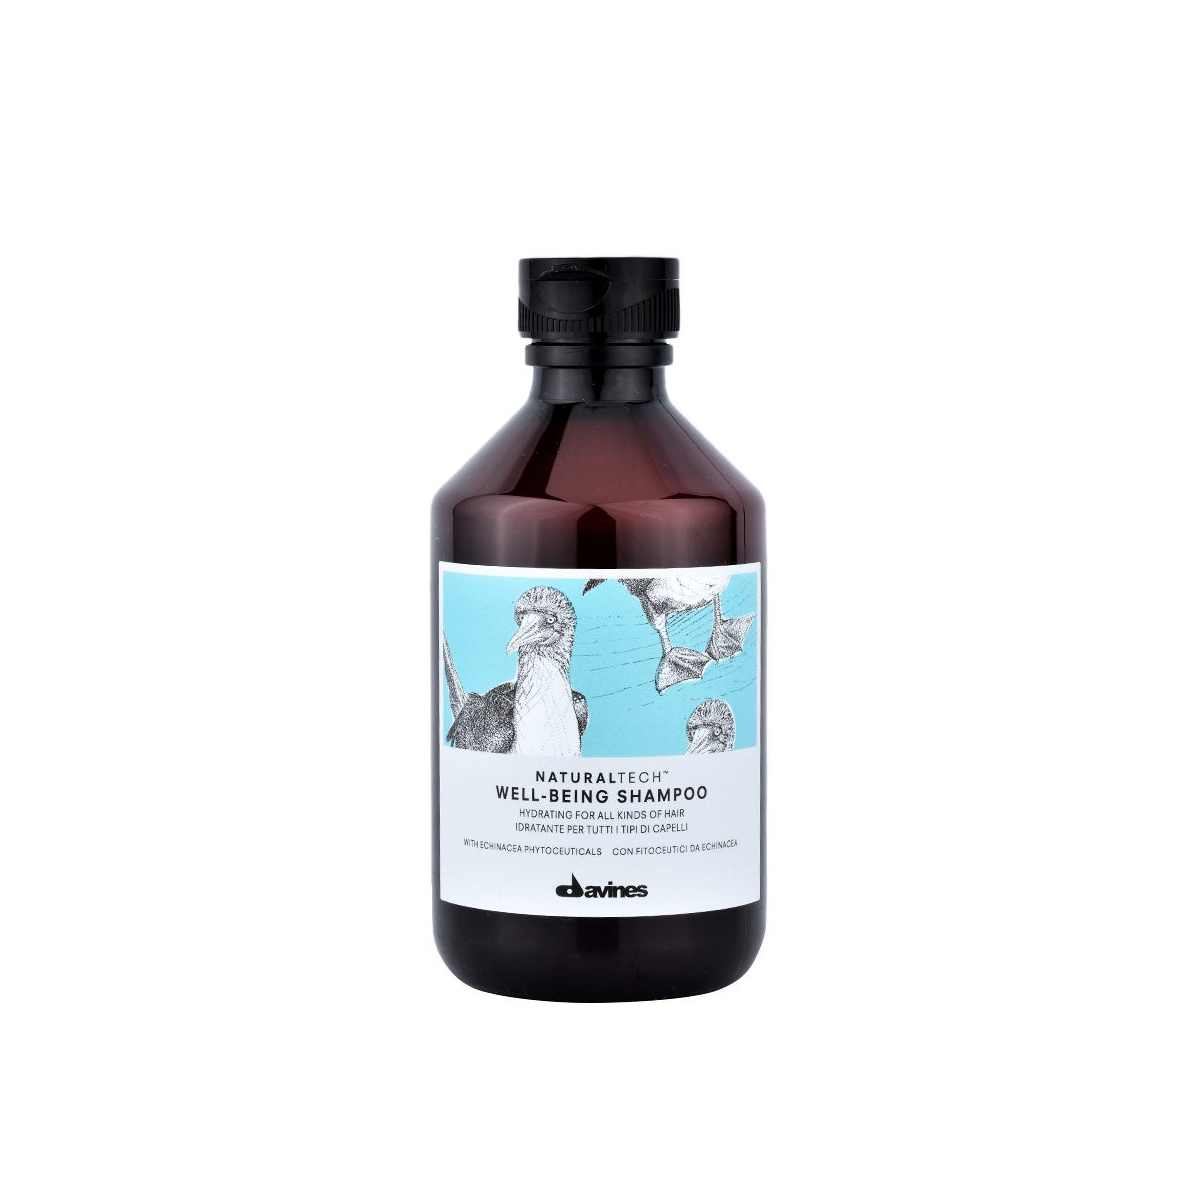 DAVINES - NATURALTECH WELL-BEING SHAMPOO (250ml) Shampoo idratante